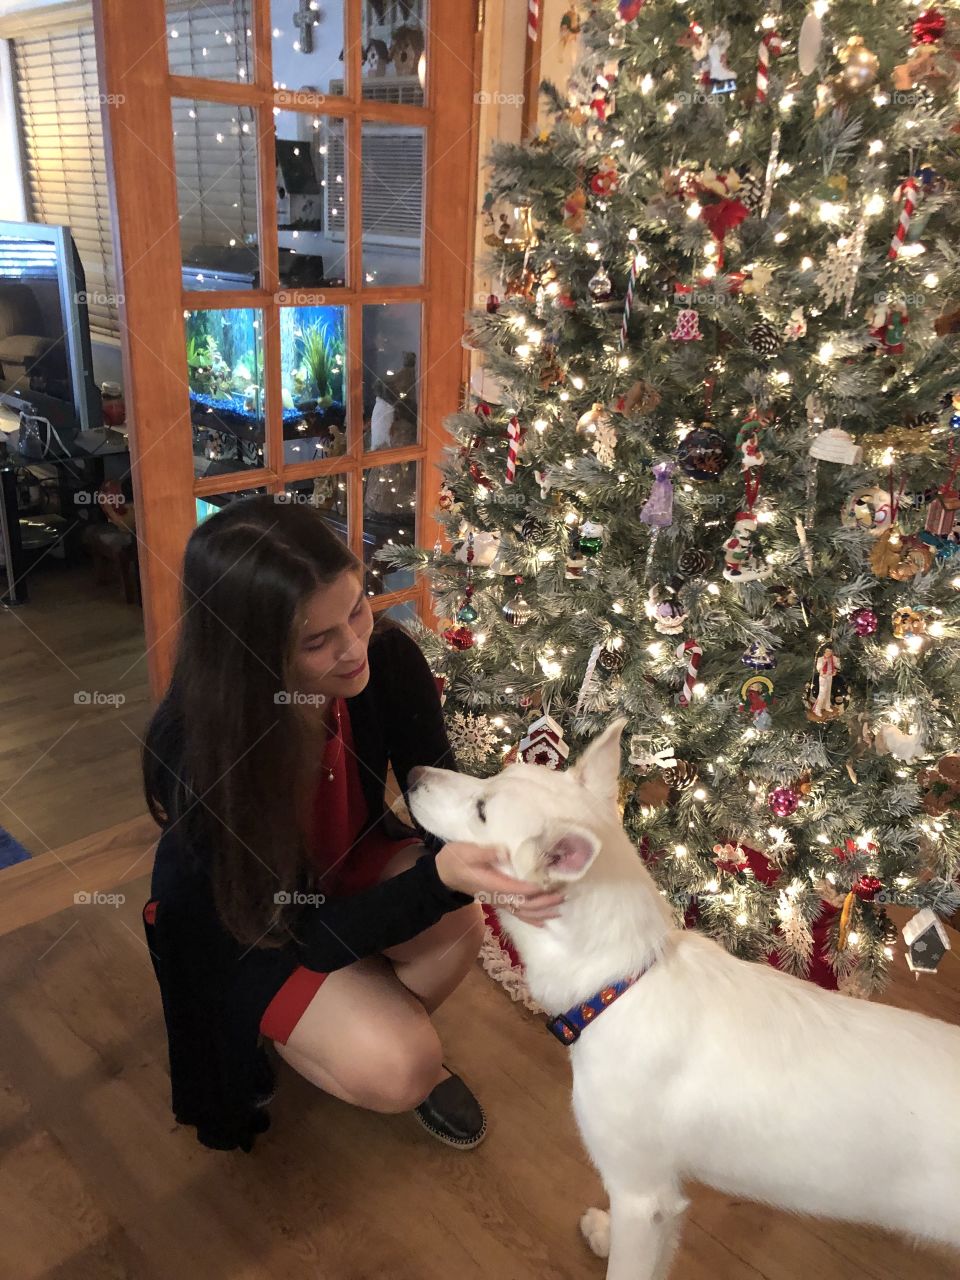 Young woman and white dog celebrating Christmas 